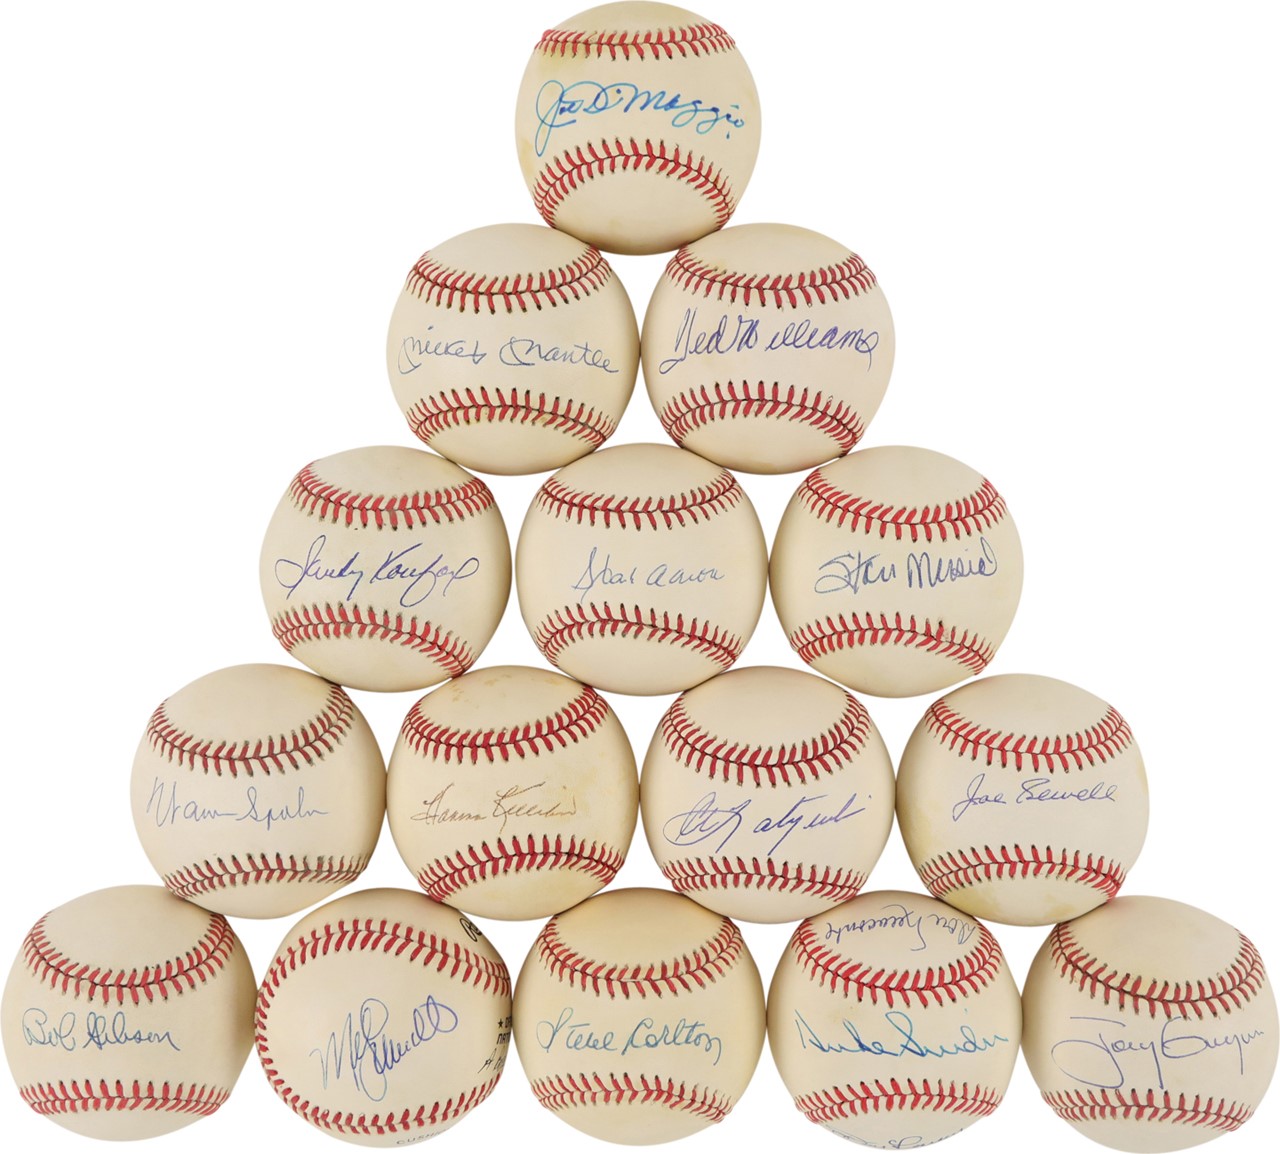 Baseball Autographs - Hall of Famers Signed Baseball Collection (15)